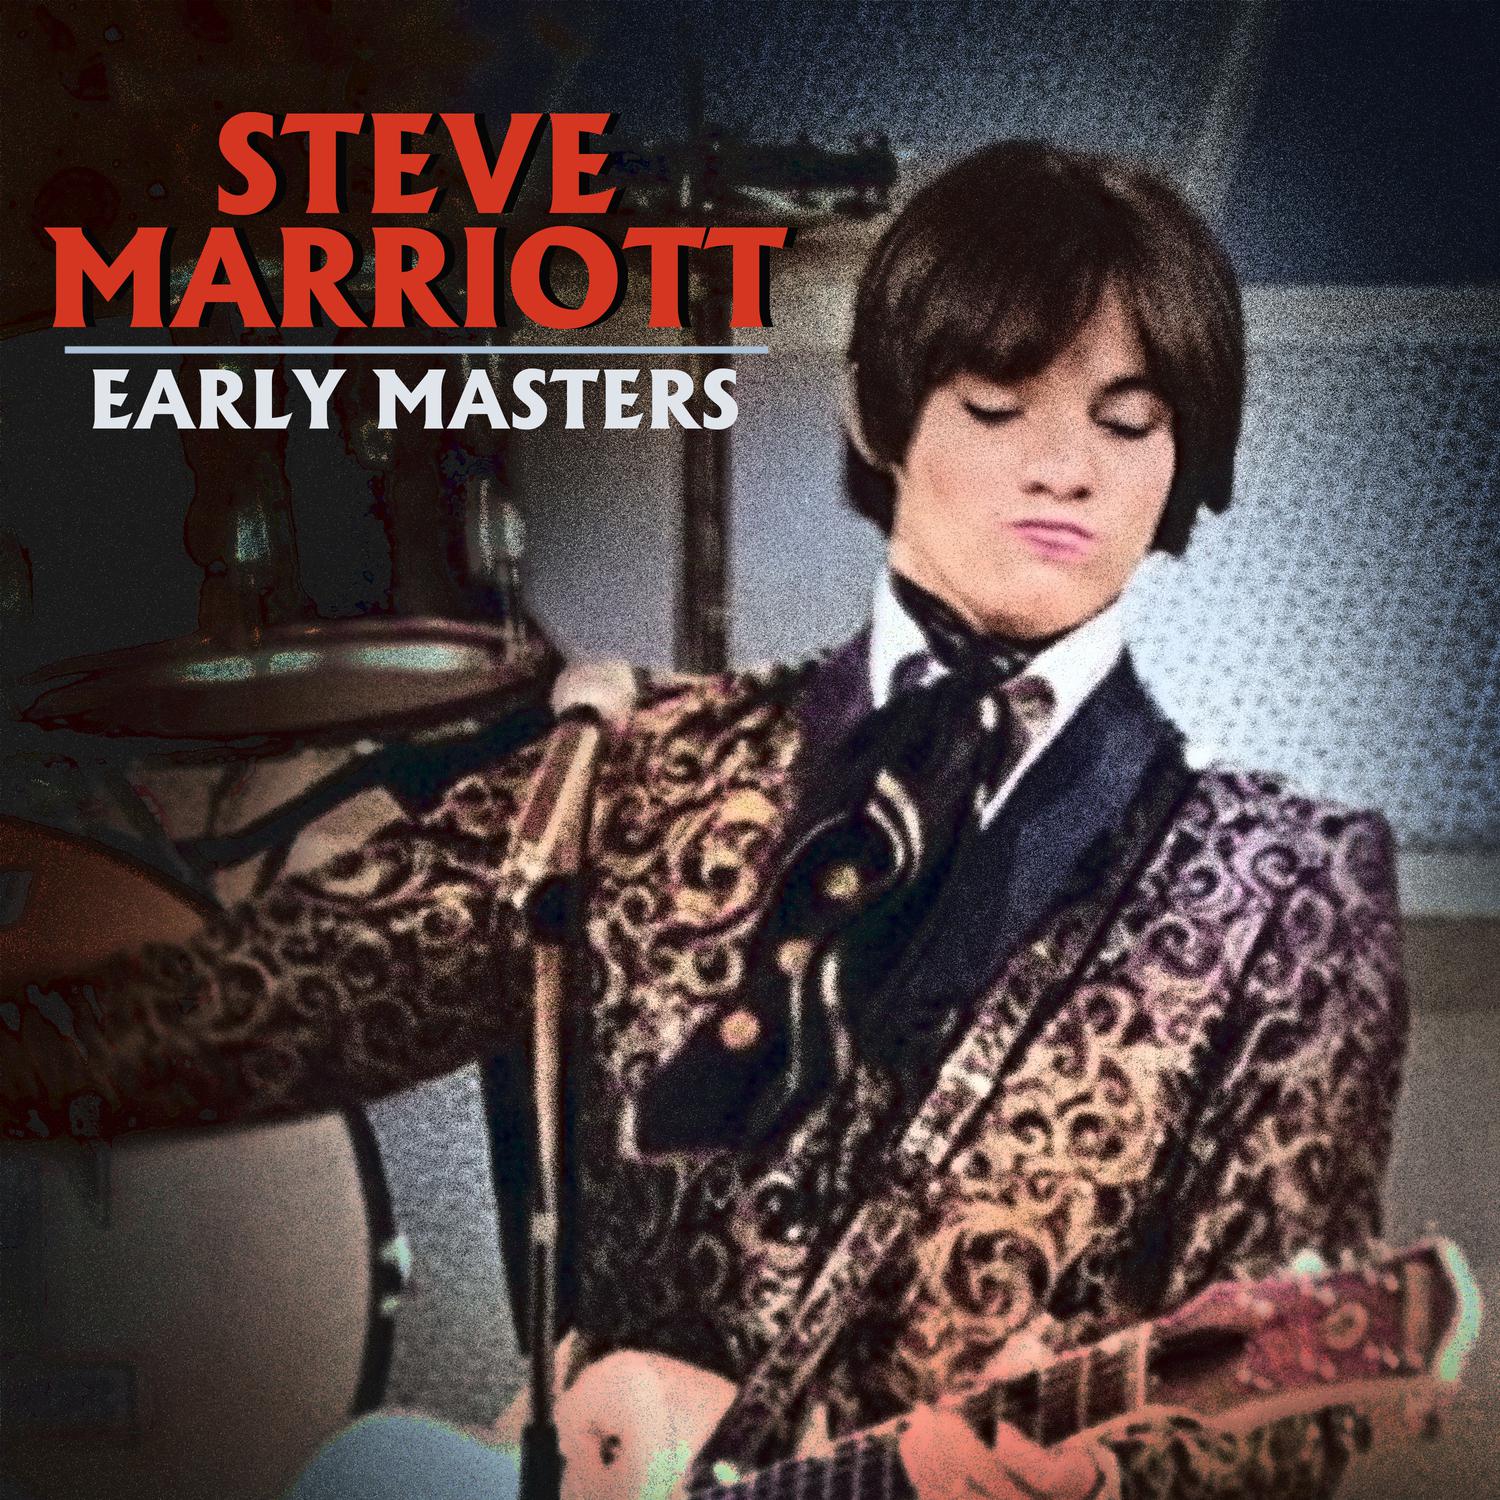 Steve Marriott - What'd I Say (Demo)